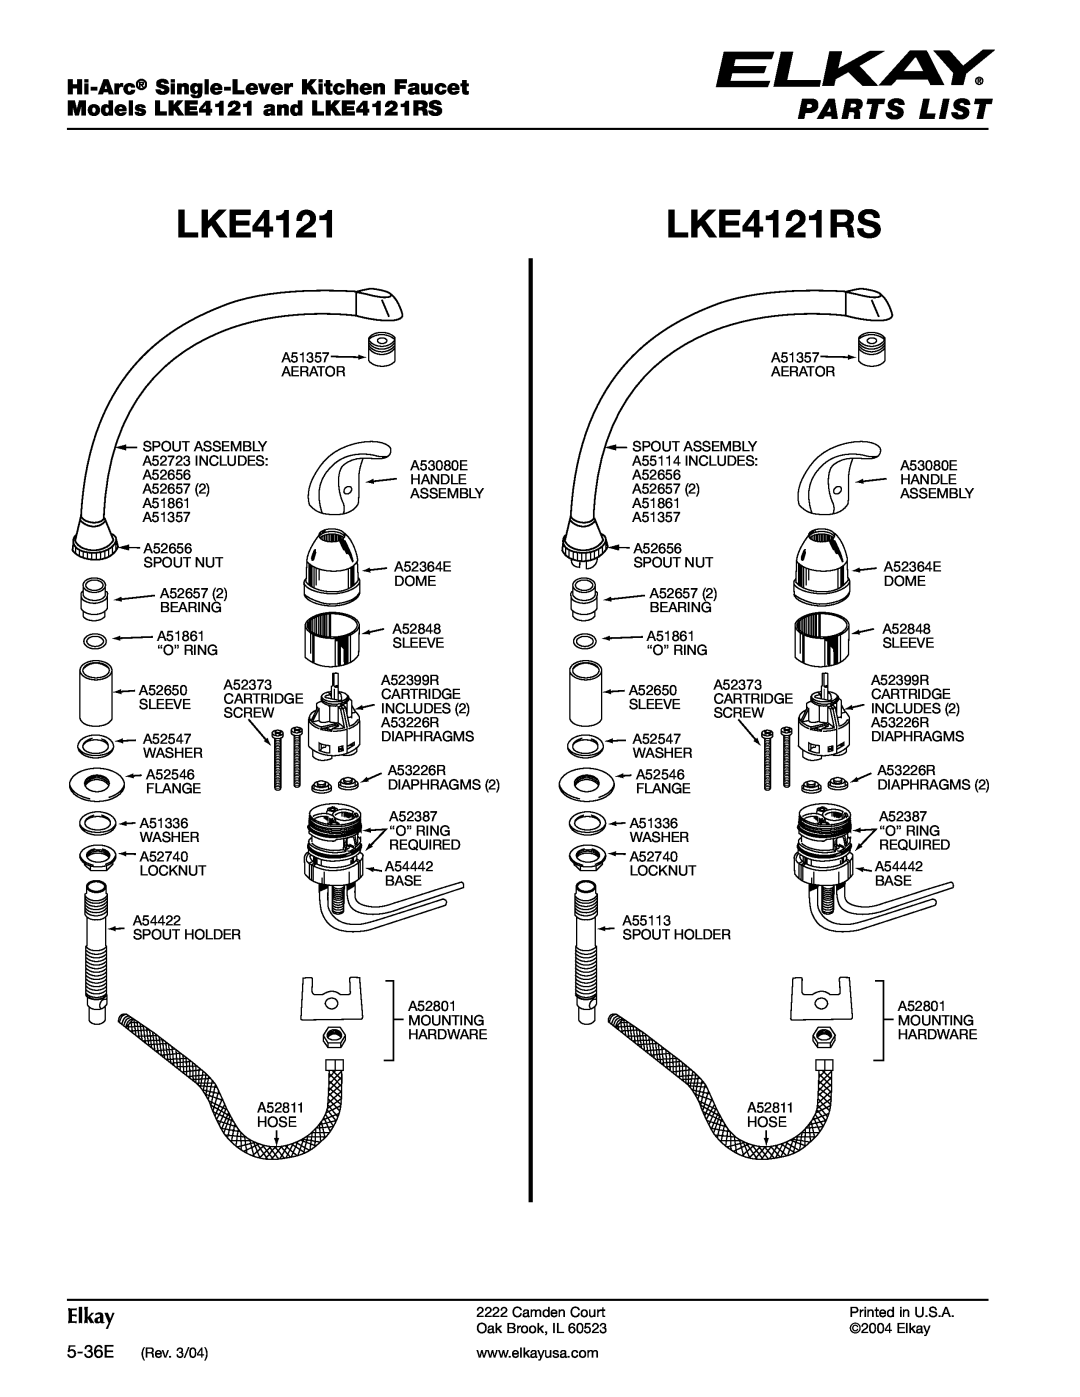 Elkay Parts List, LKE4121LKE4121RS, Hi-Arc Single-Lever Kitchen Faucet, Models LKE4121 and LKE4121RS, Elkay, 5-36E 